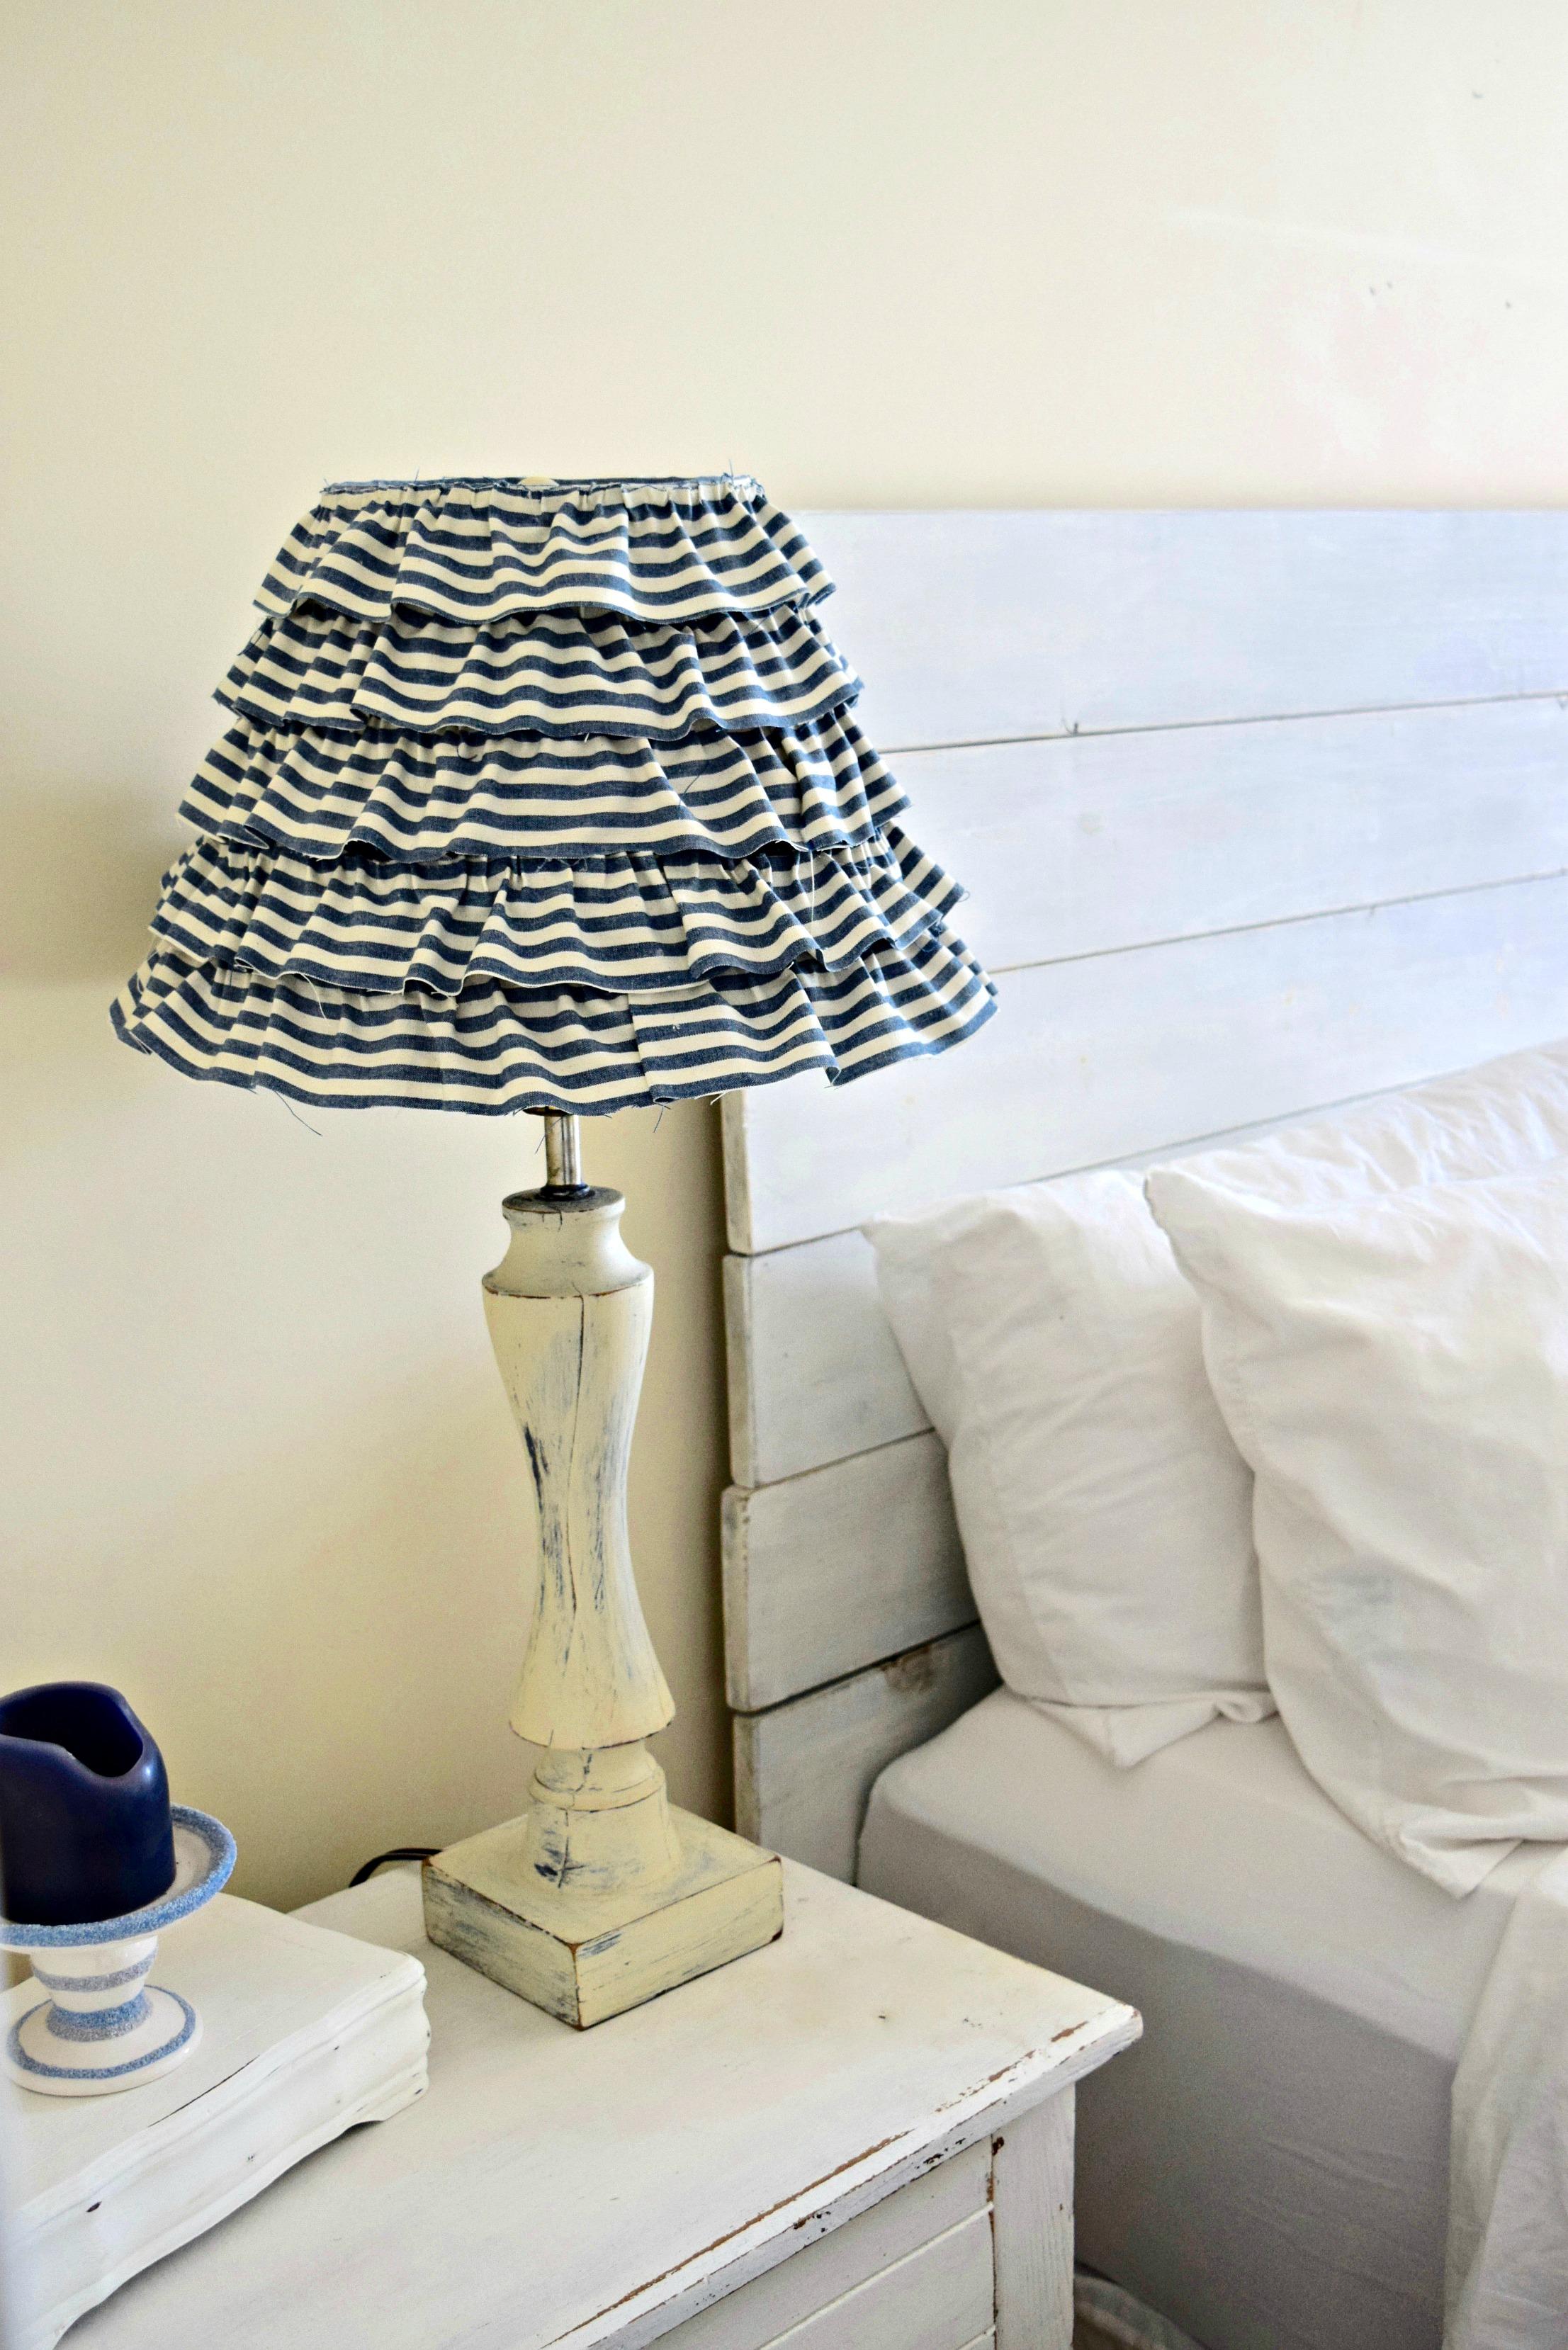 diy-lamp-paint-fabric-farmhouse-rustic-decor-recreateddesigns-cream-white-blue.jpg